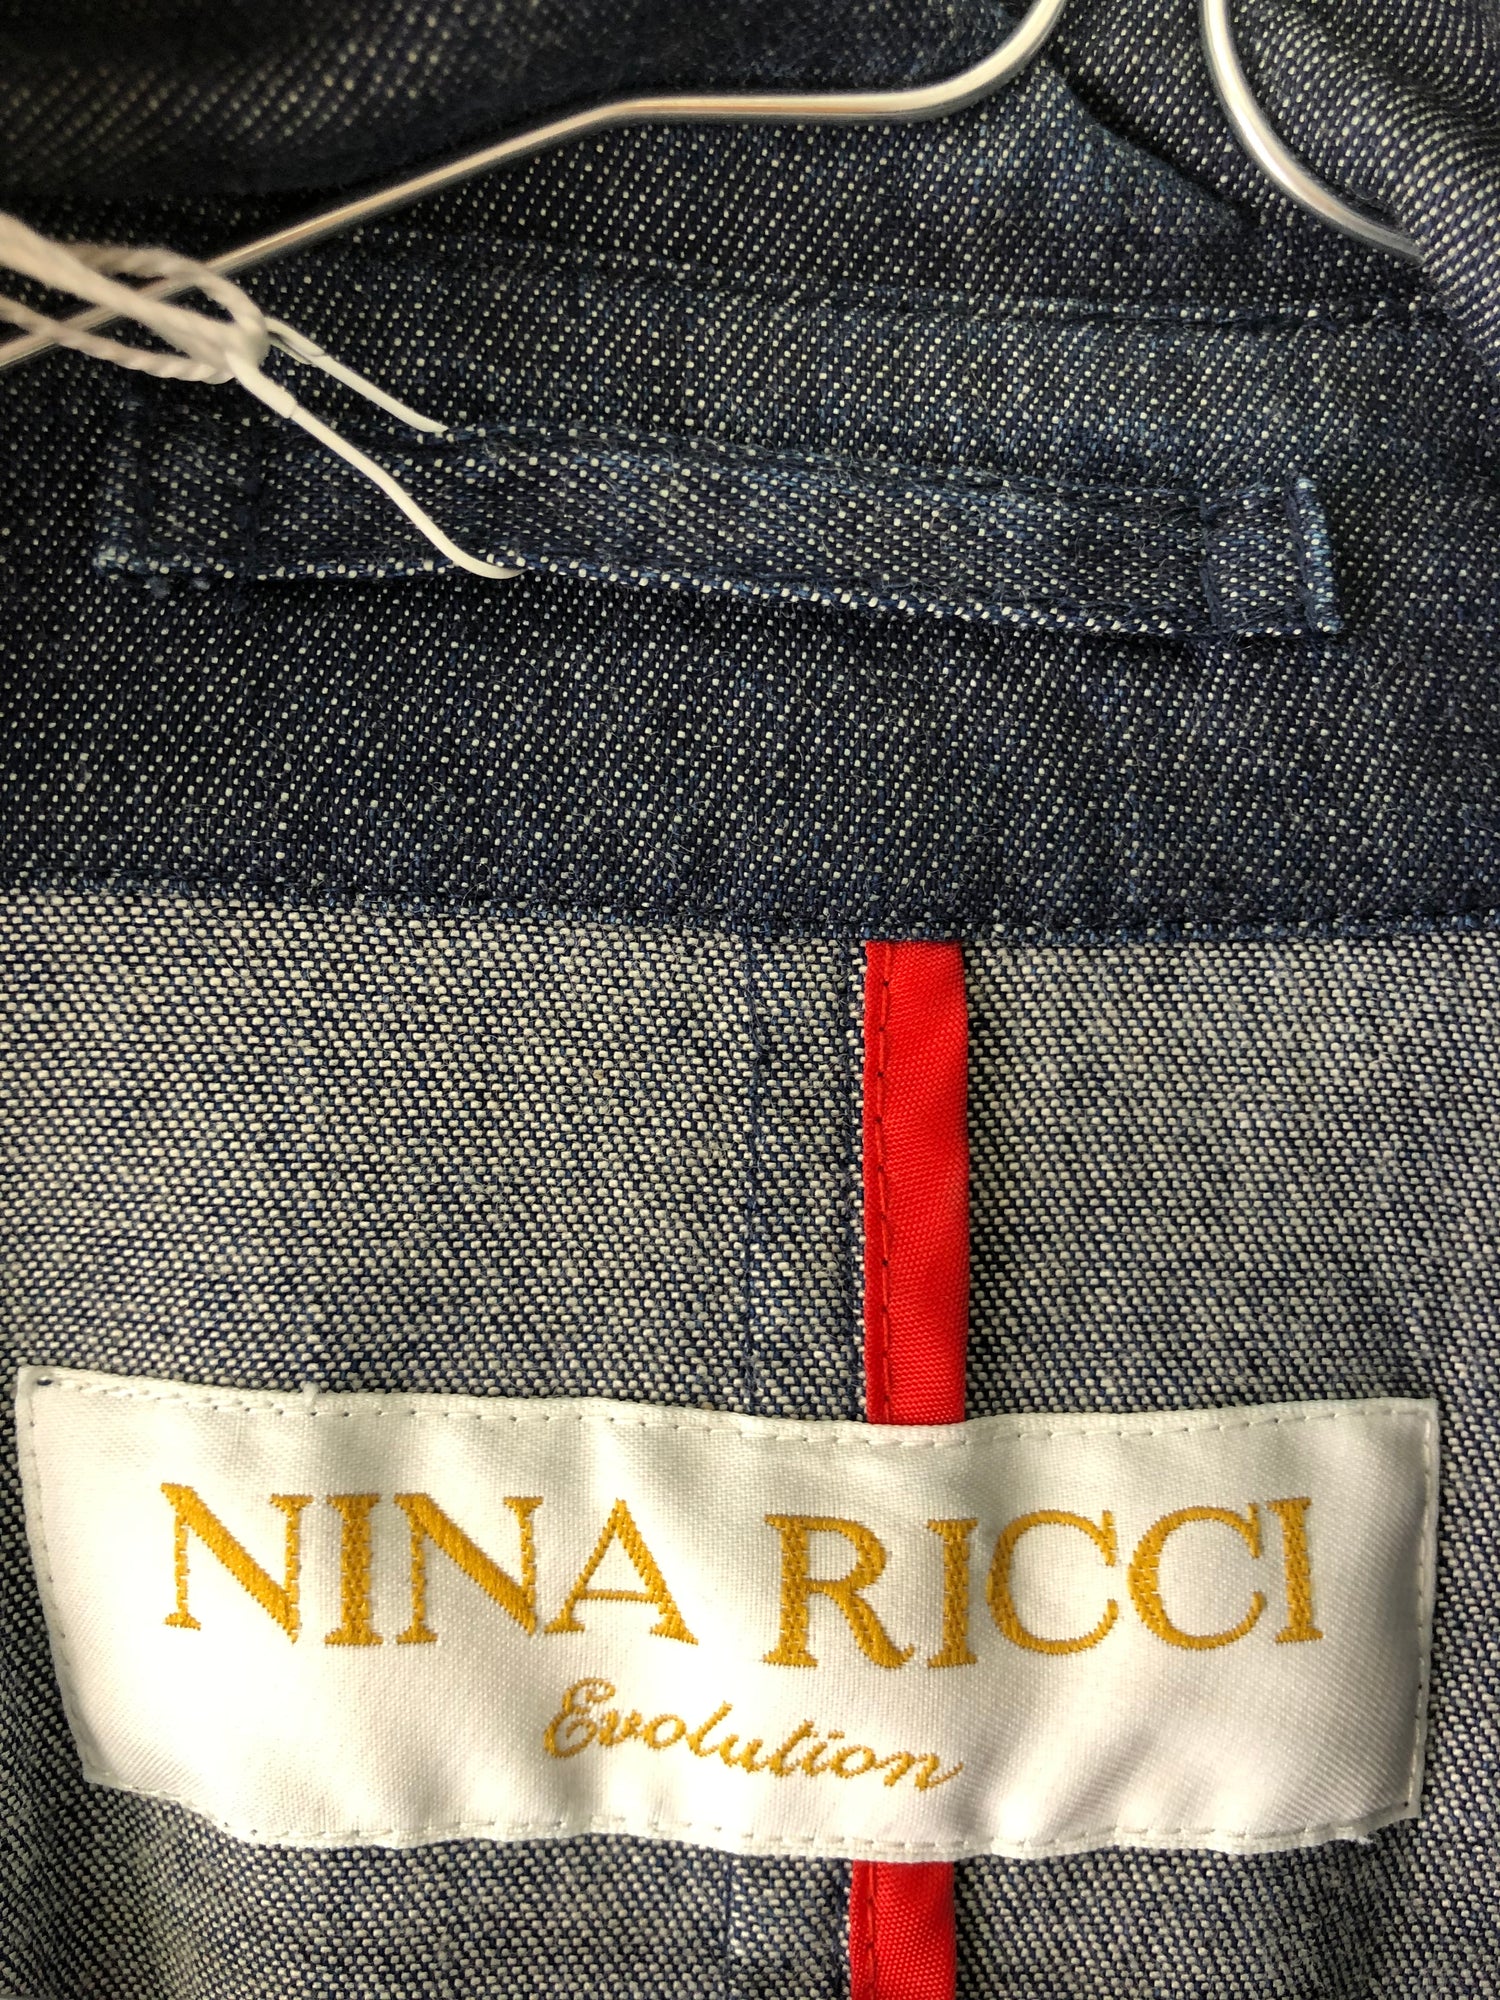 Nina Ricci vintage denim trench coat - M - 2000s